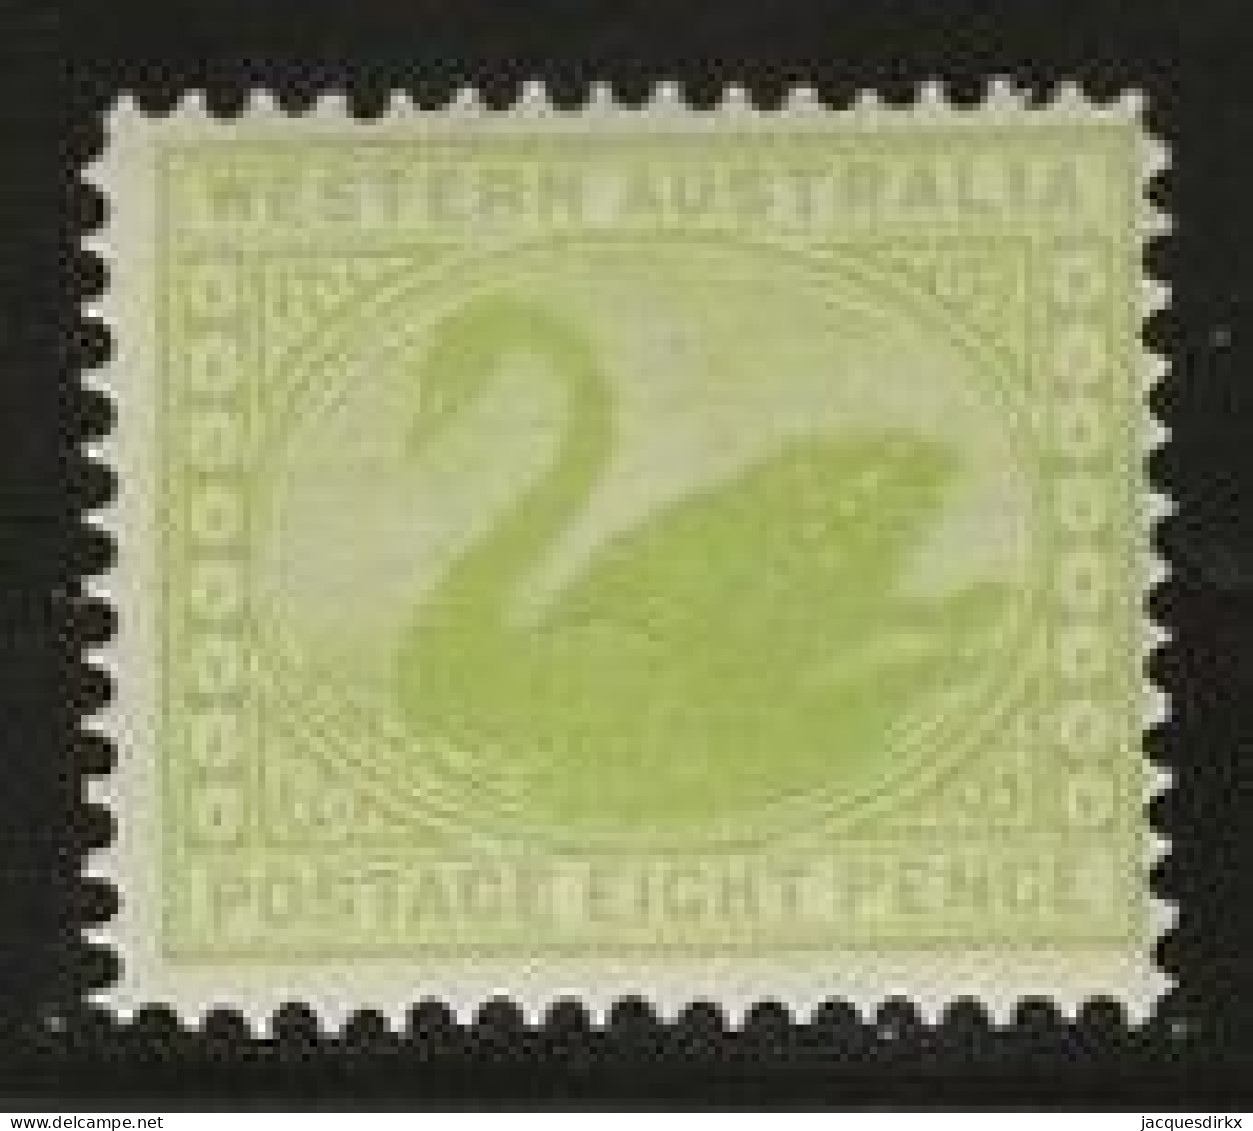 Western Australia     .   SG    .    121          .   *       .     Mint-hinged - Ongebruikt